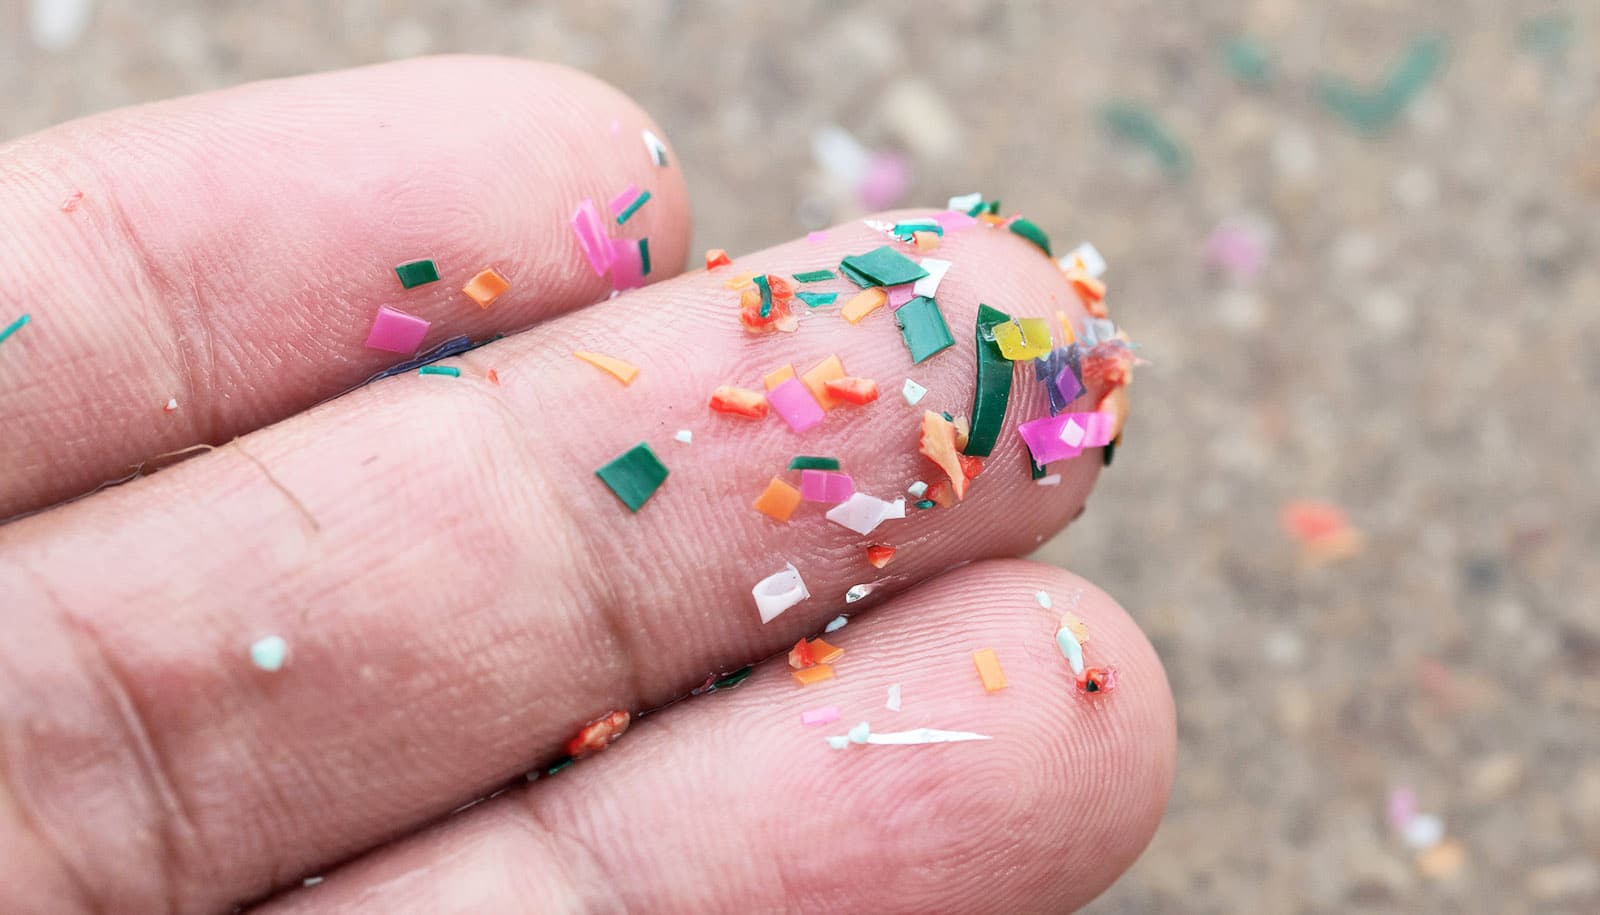 microplastic bits on fingers